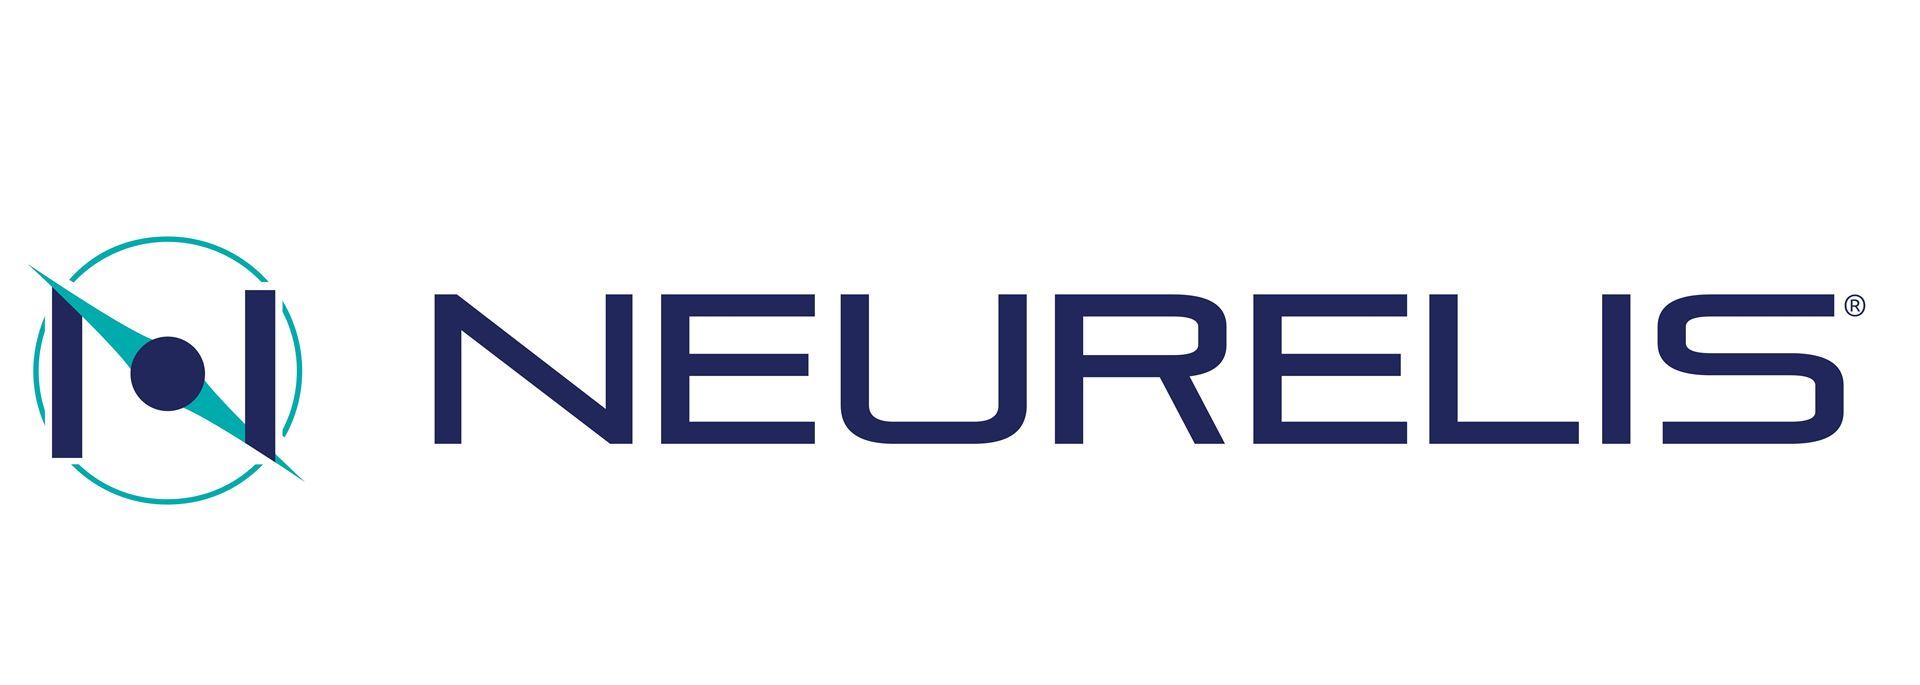 Neurelis Logo